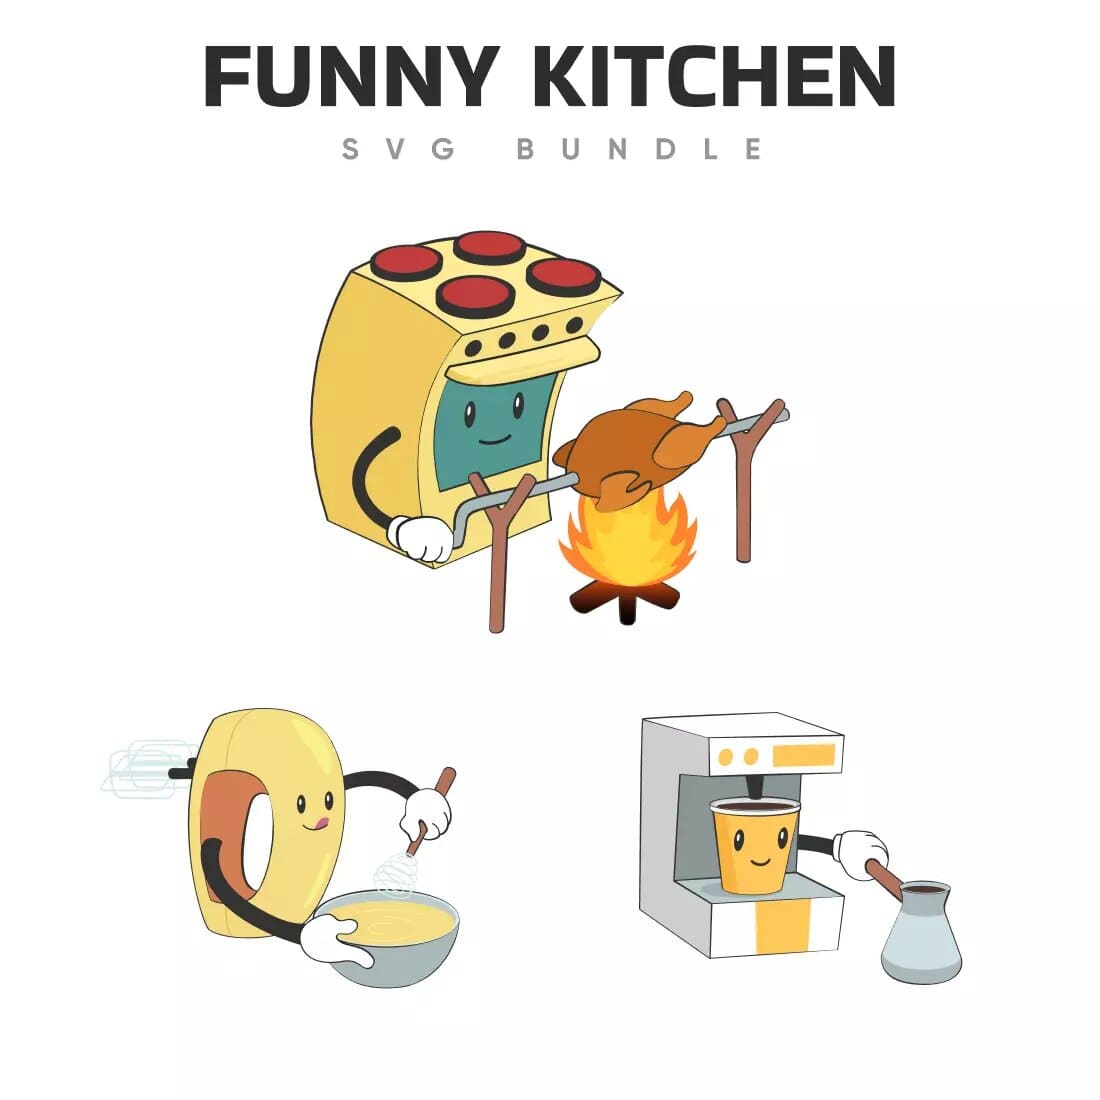 Funny Kitchen SVG Bundle Preview 1.